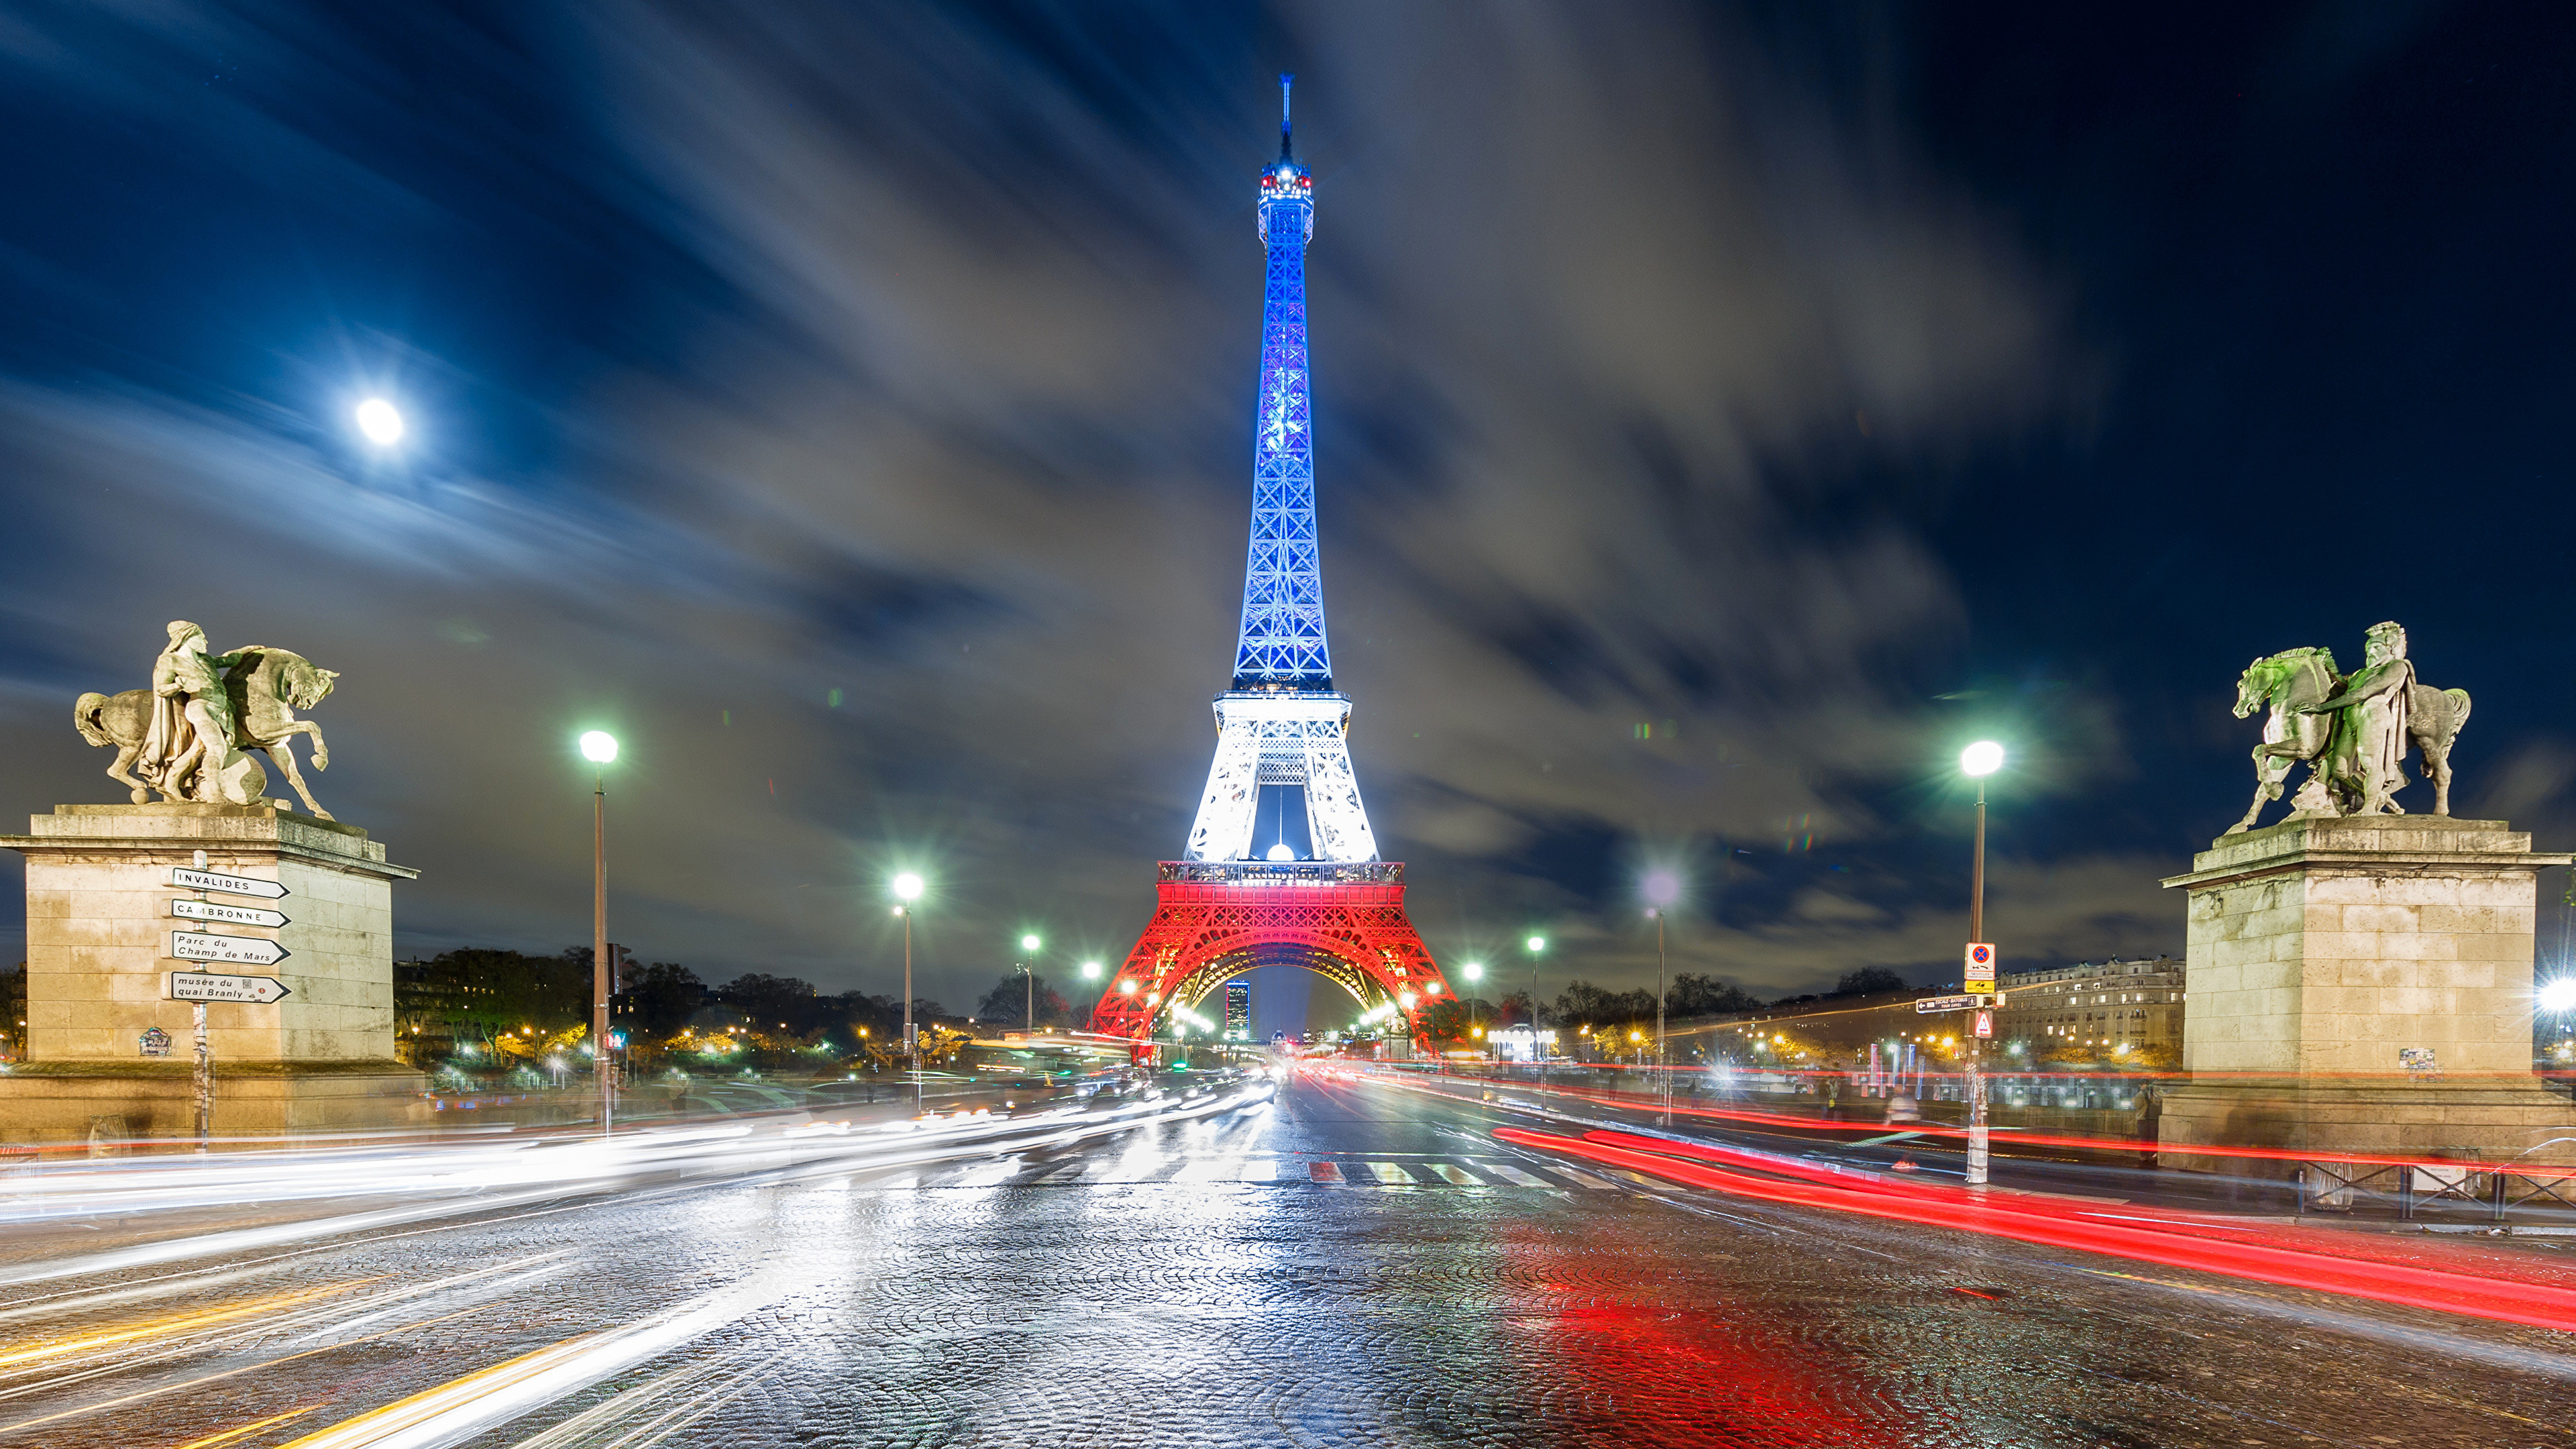 3840x2160 Eiffel tower at Night Paris France Wallpaper Free Desktop Wallpapers New